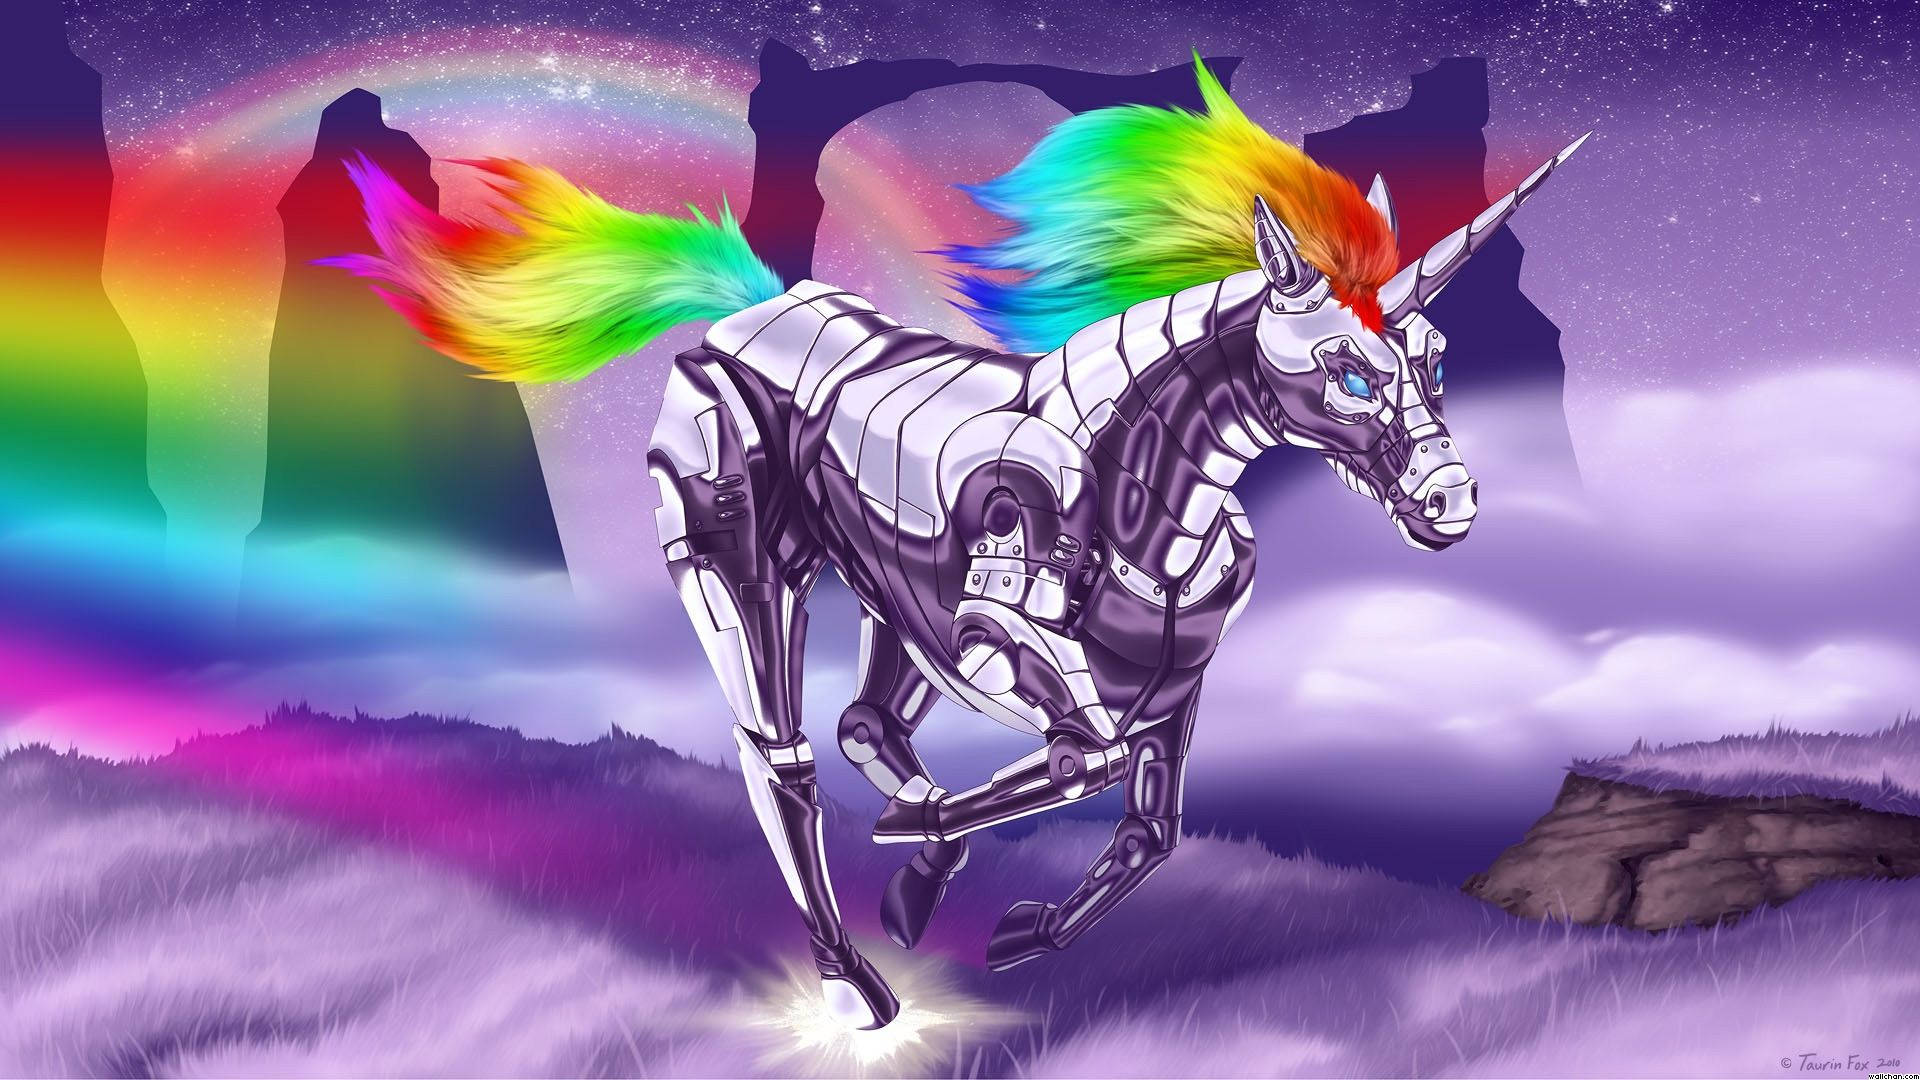 Caption: Majestic Metallic Rainbow Unicorn Background